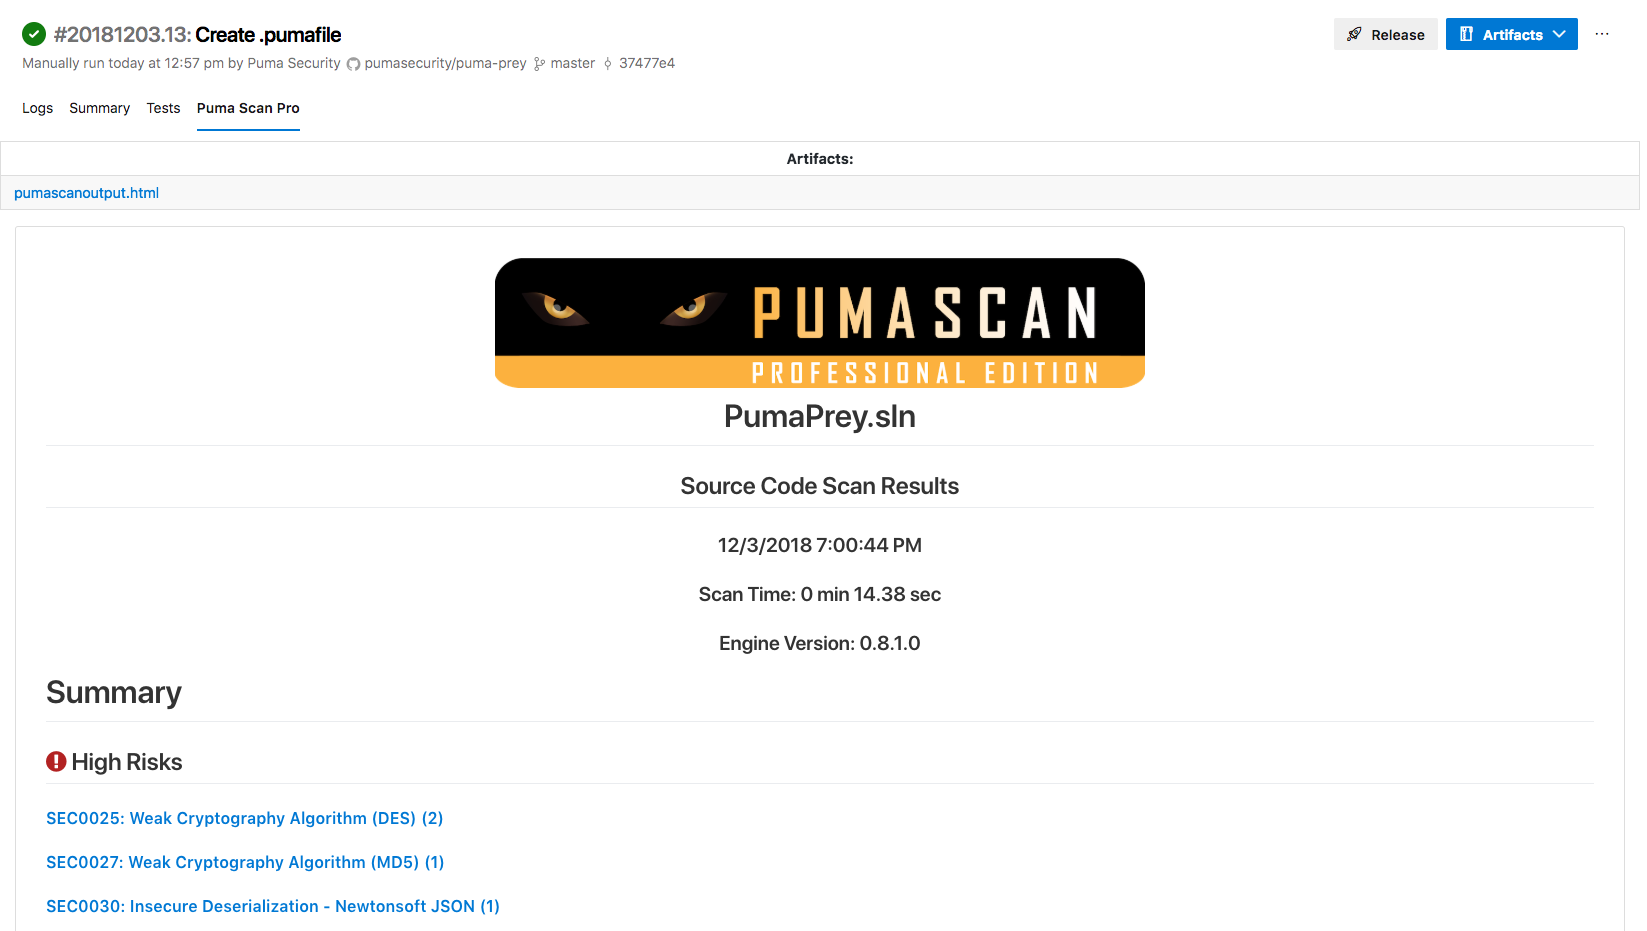 puma beta testing application